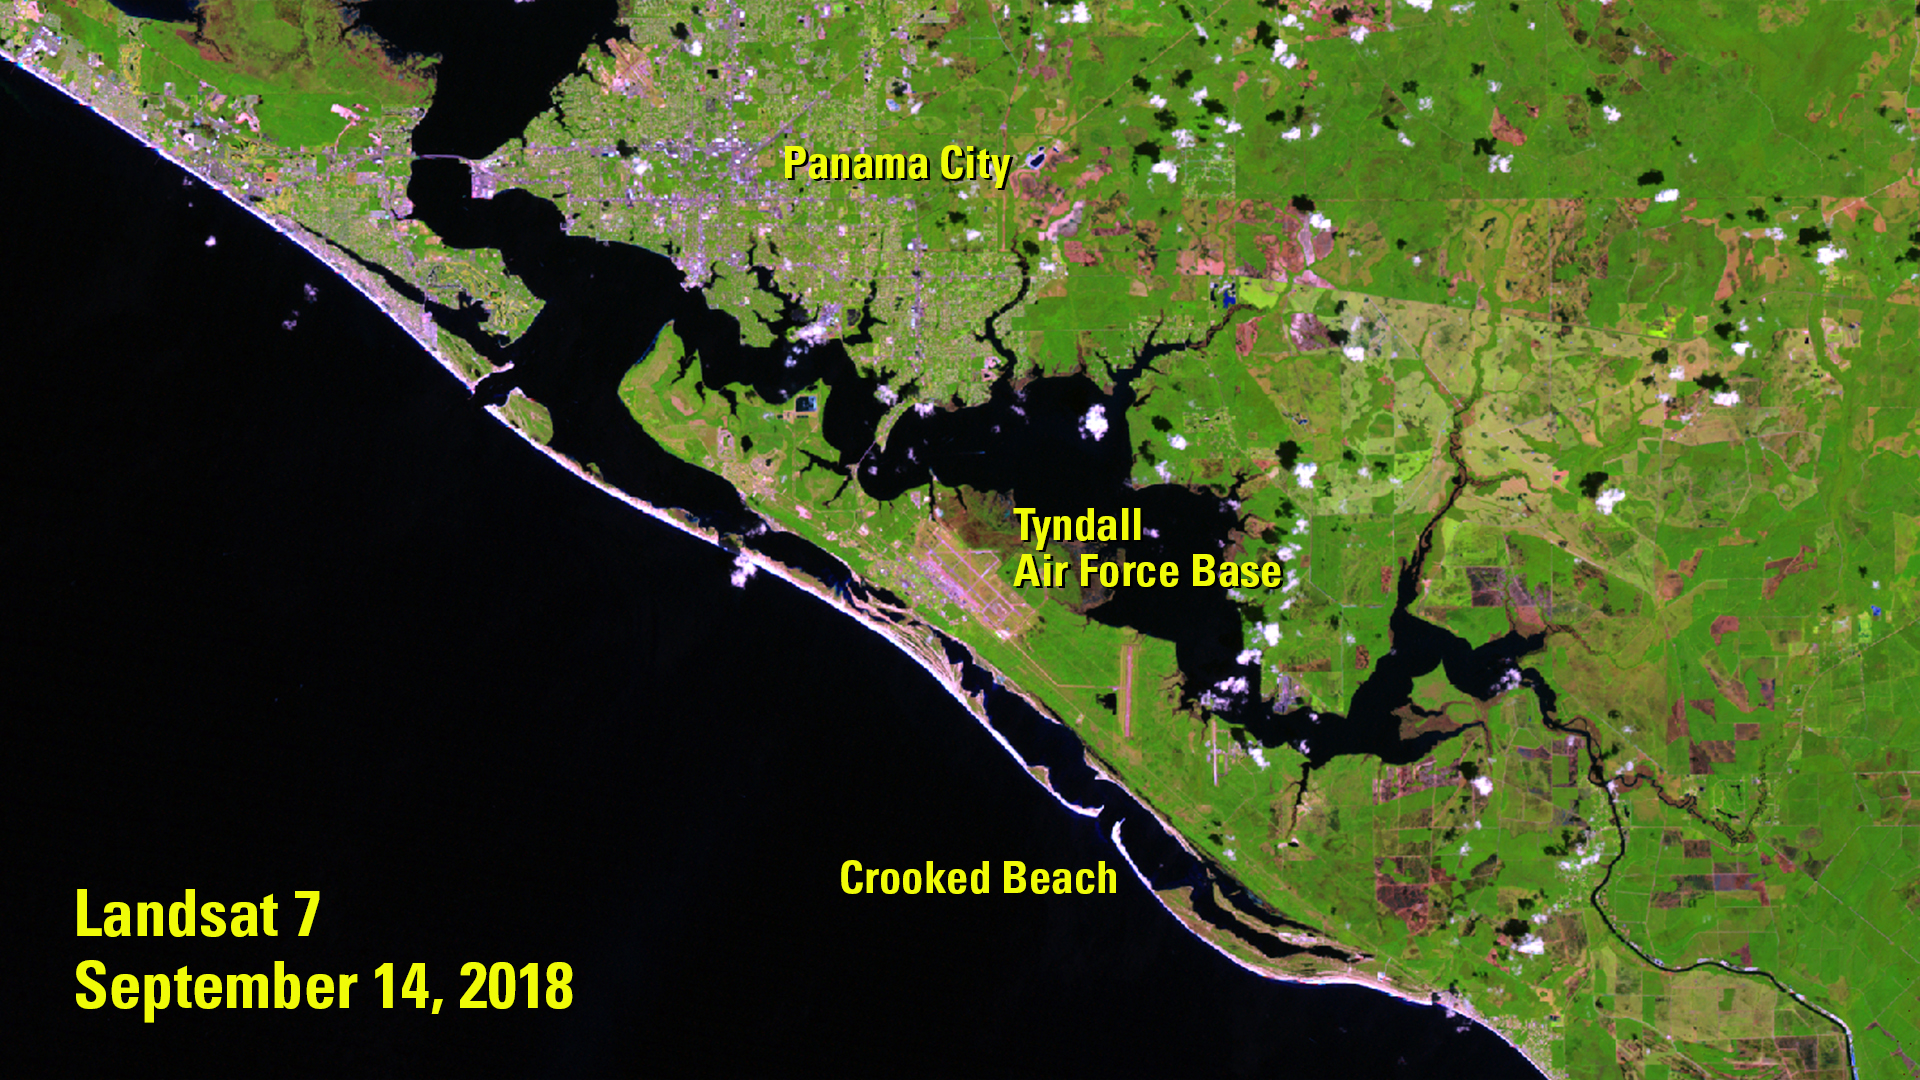 Florida Panhandle before Hurricane Michael made landfall